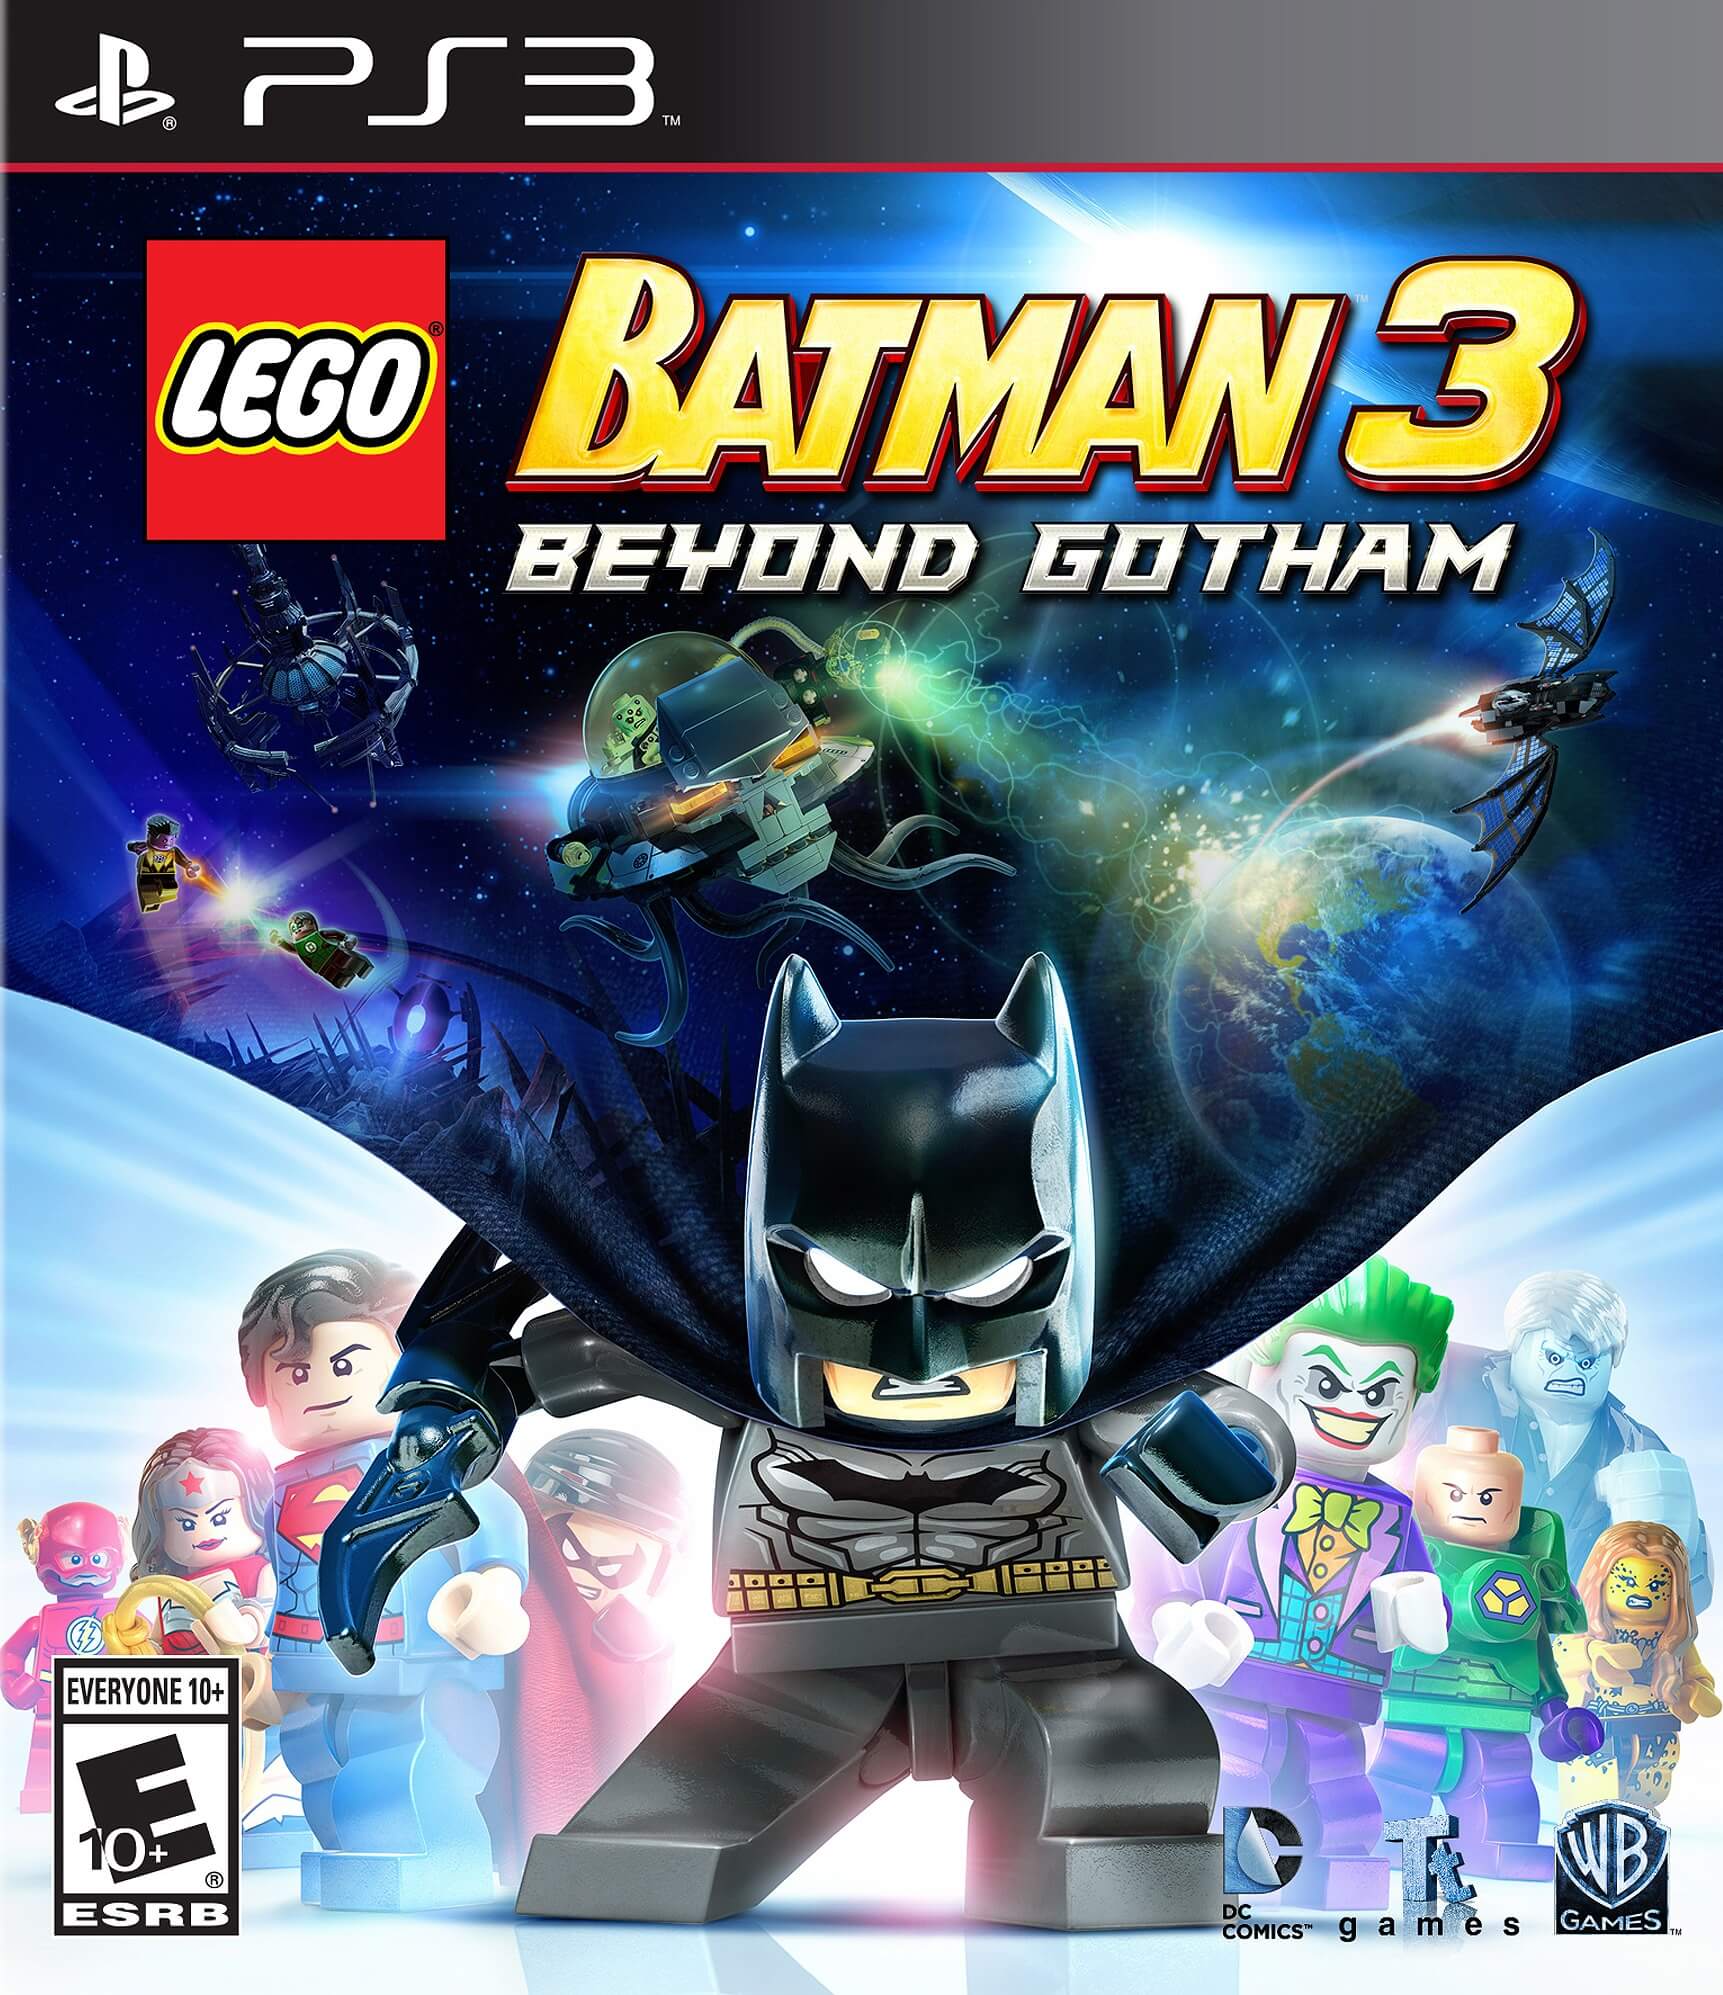 ProTip LEGO Batman 3 Gotham APK for Android Download